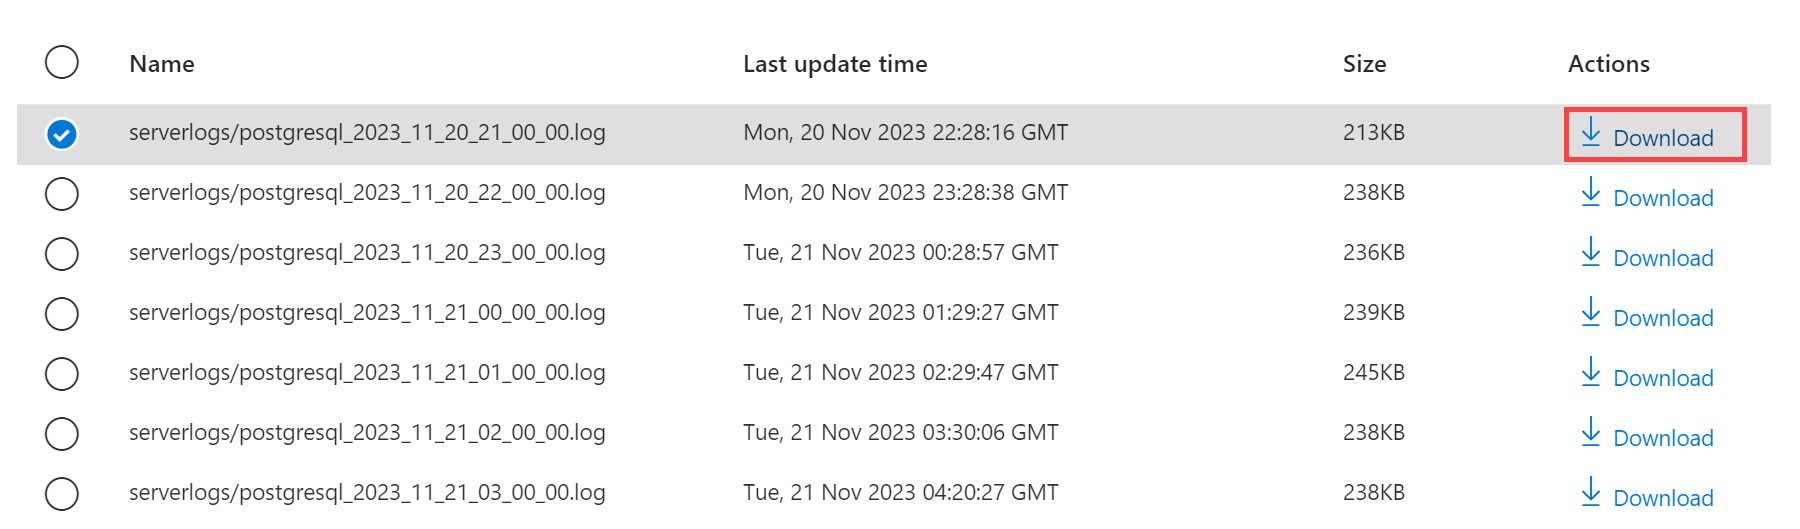 Screenshot showing Server Logs - Download.